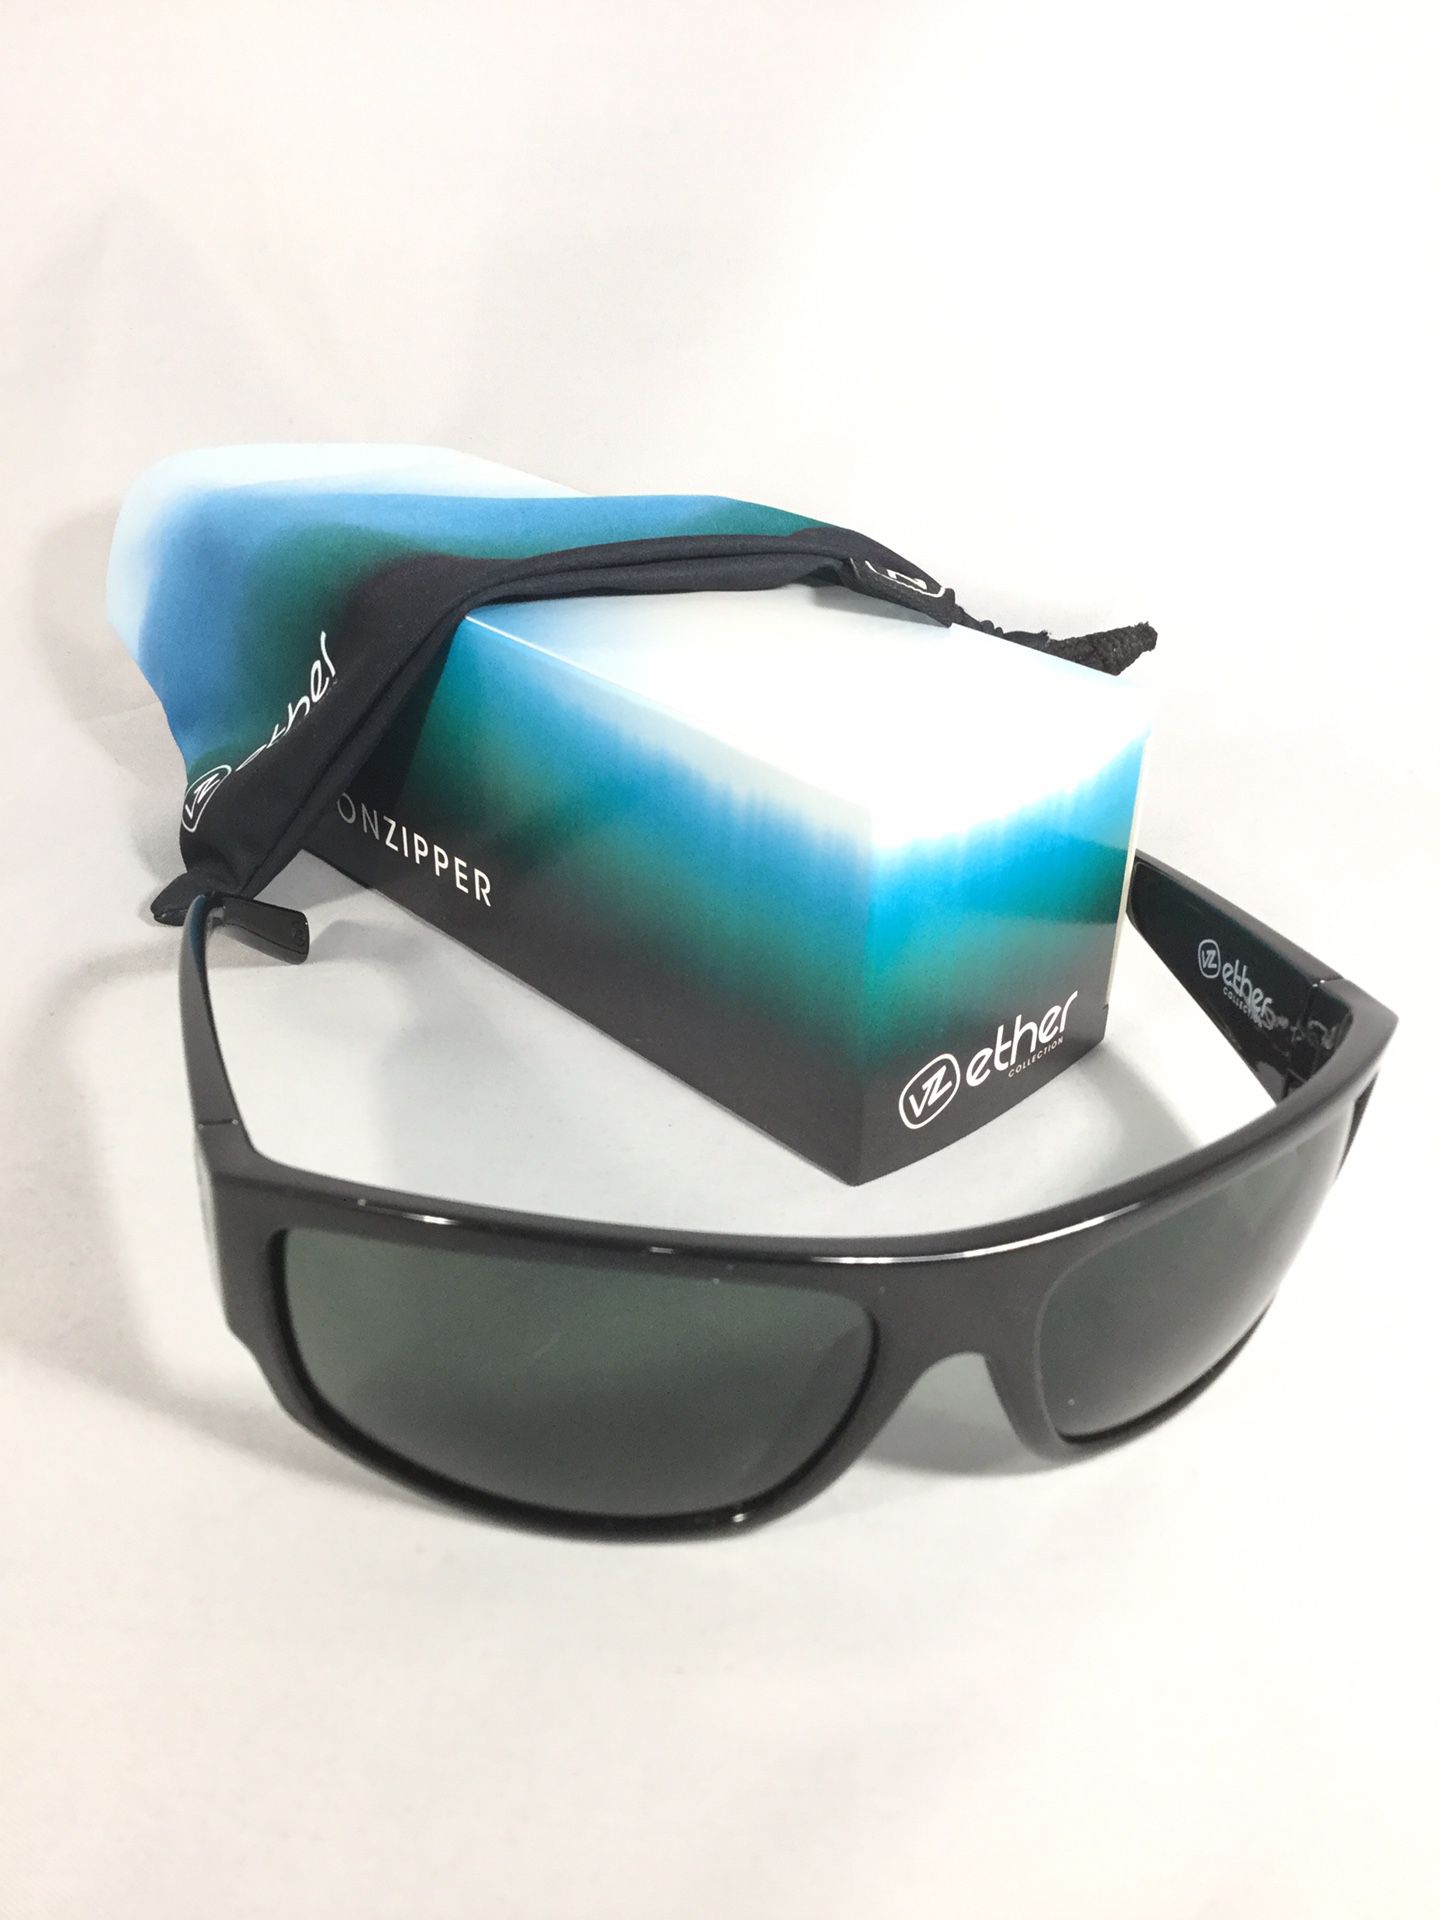 New Bon Zipper “Semi” Sunglasses